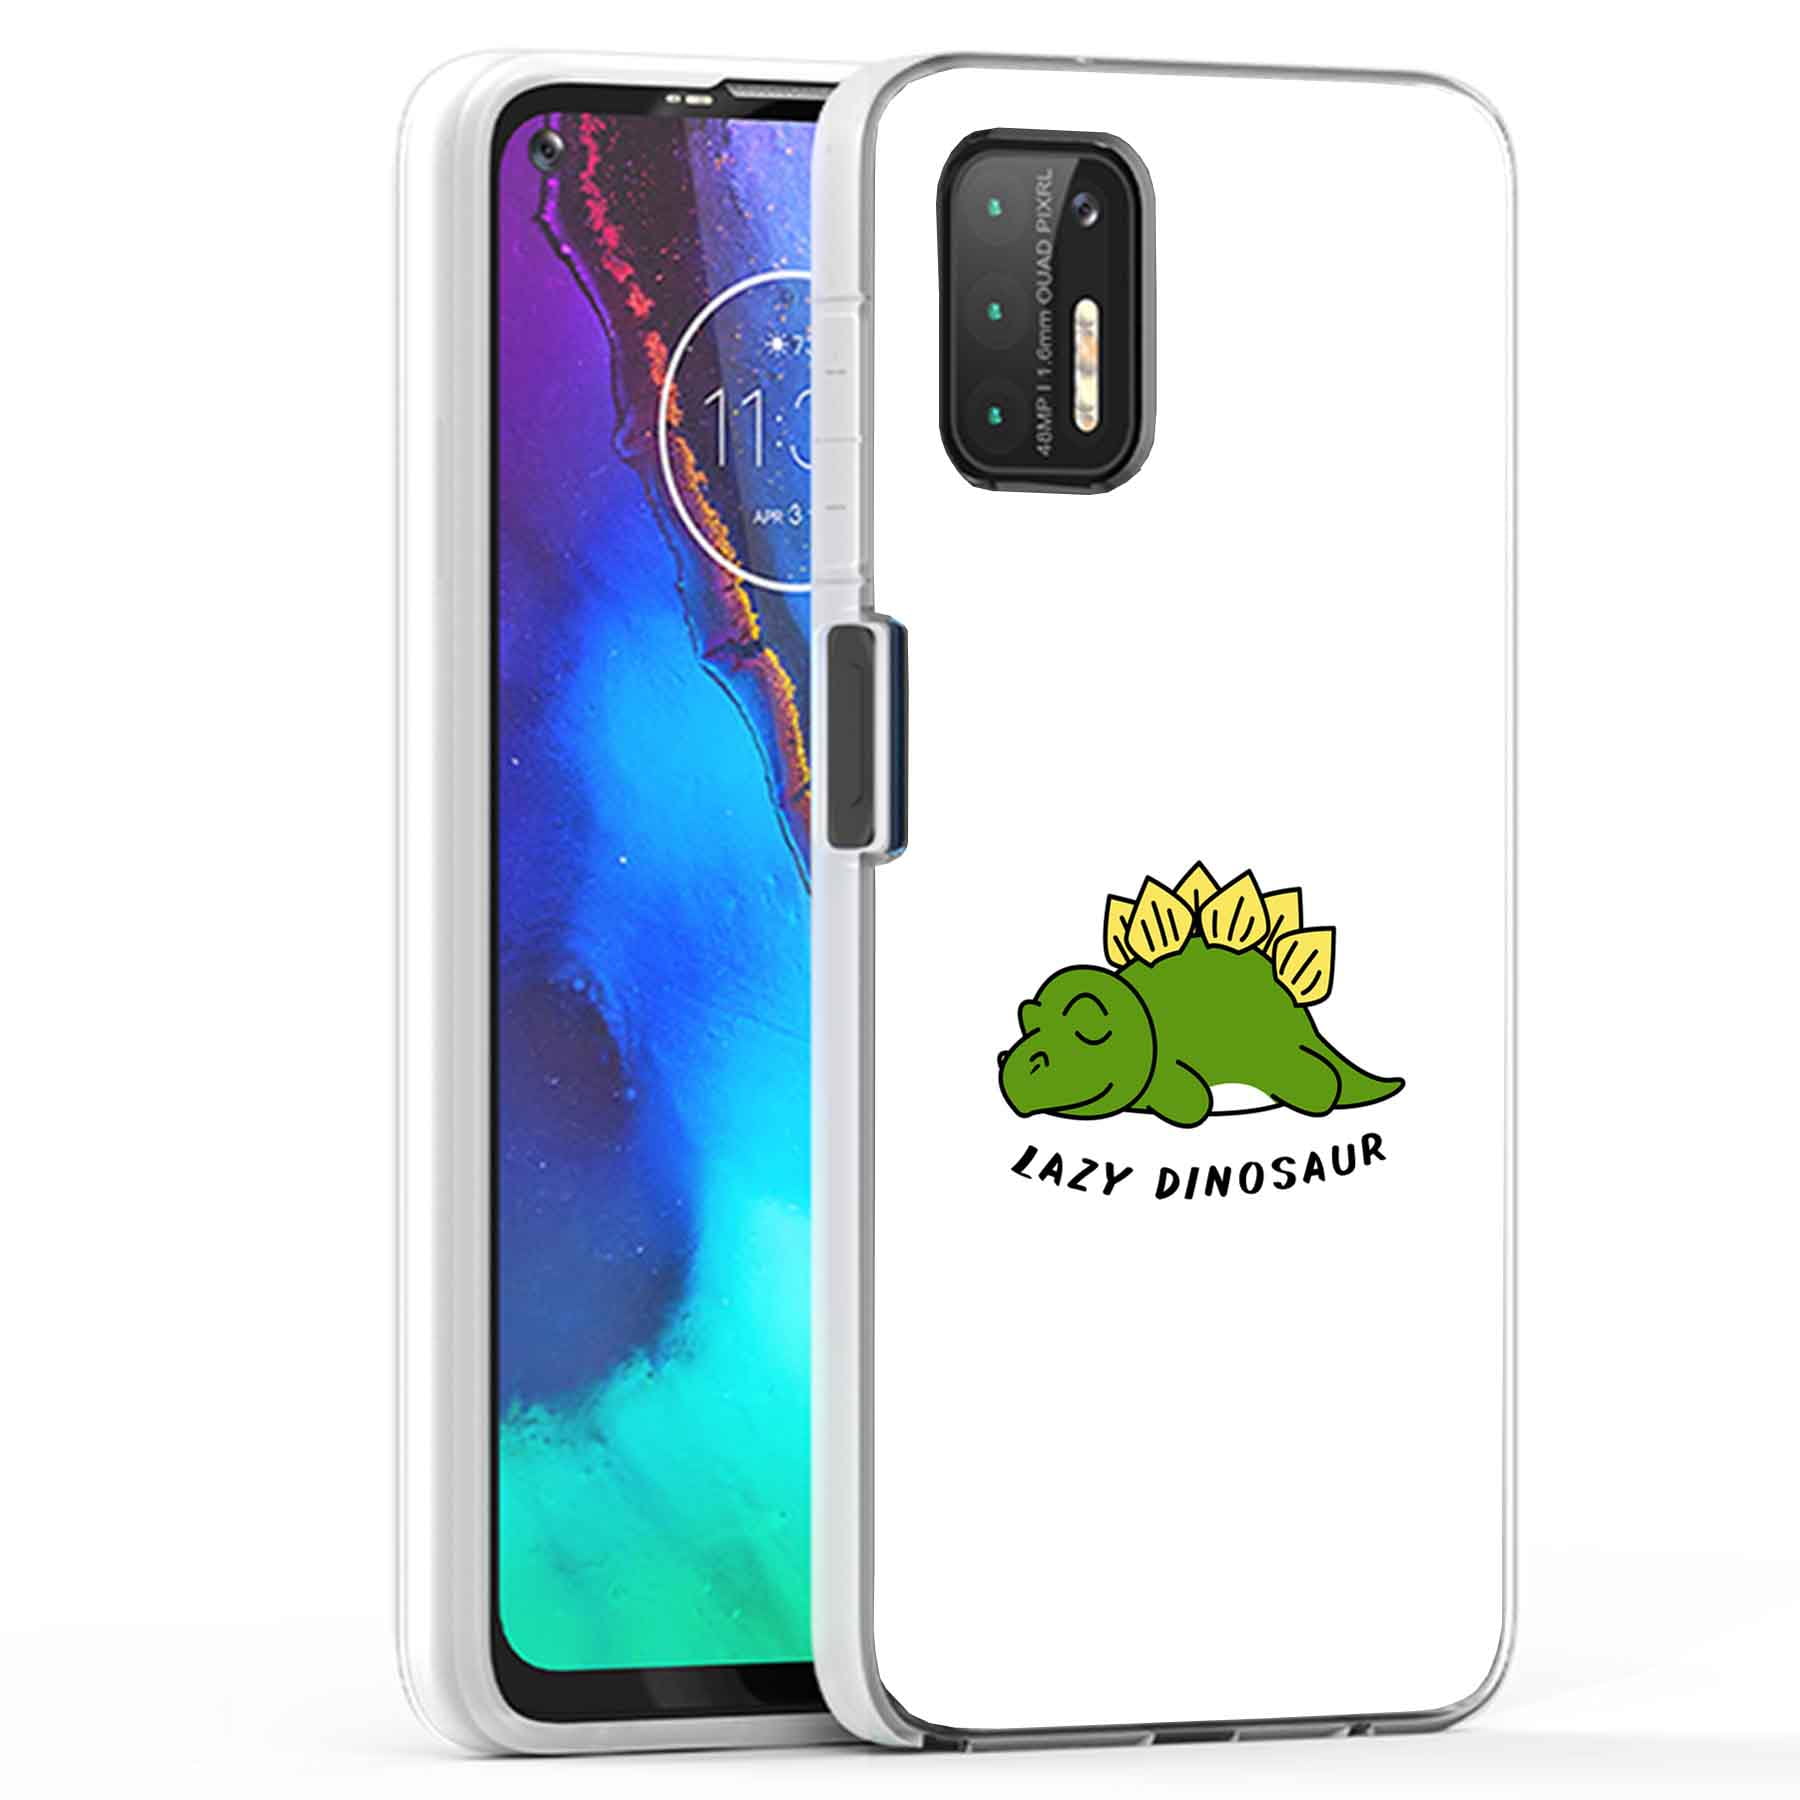 TPU Phone Case Cover for Motorola Moto G Stylus 2021,Moto G Stylus Series,Cute Dinosaur Clear Print,Light,Flexible,ProtectUSA